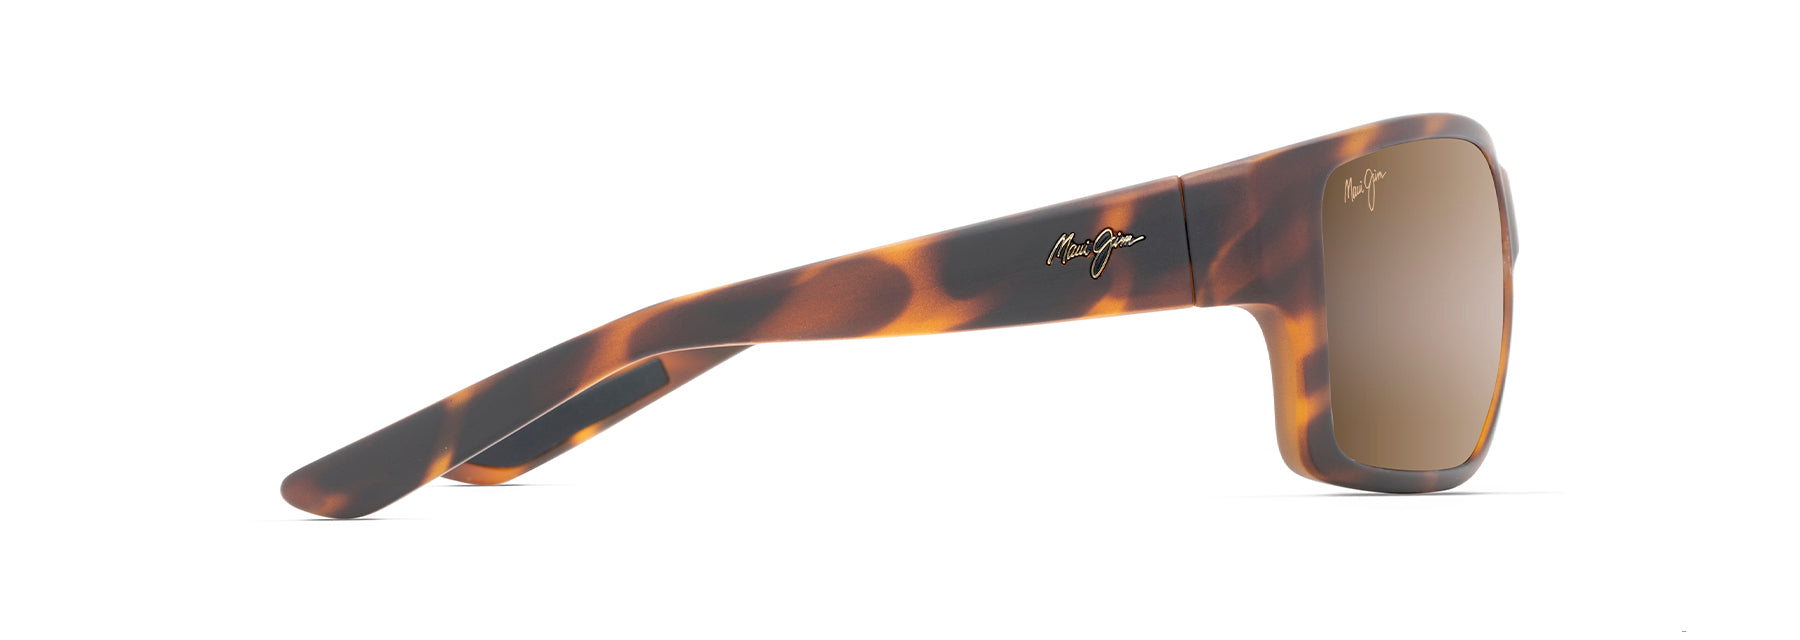 Maui Jim Mangroves Sunglasses